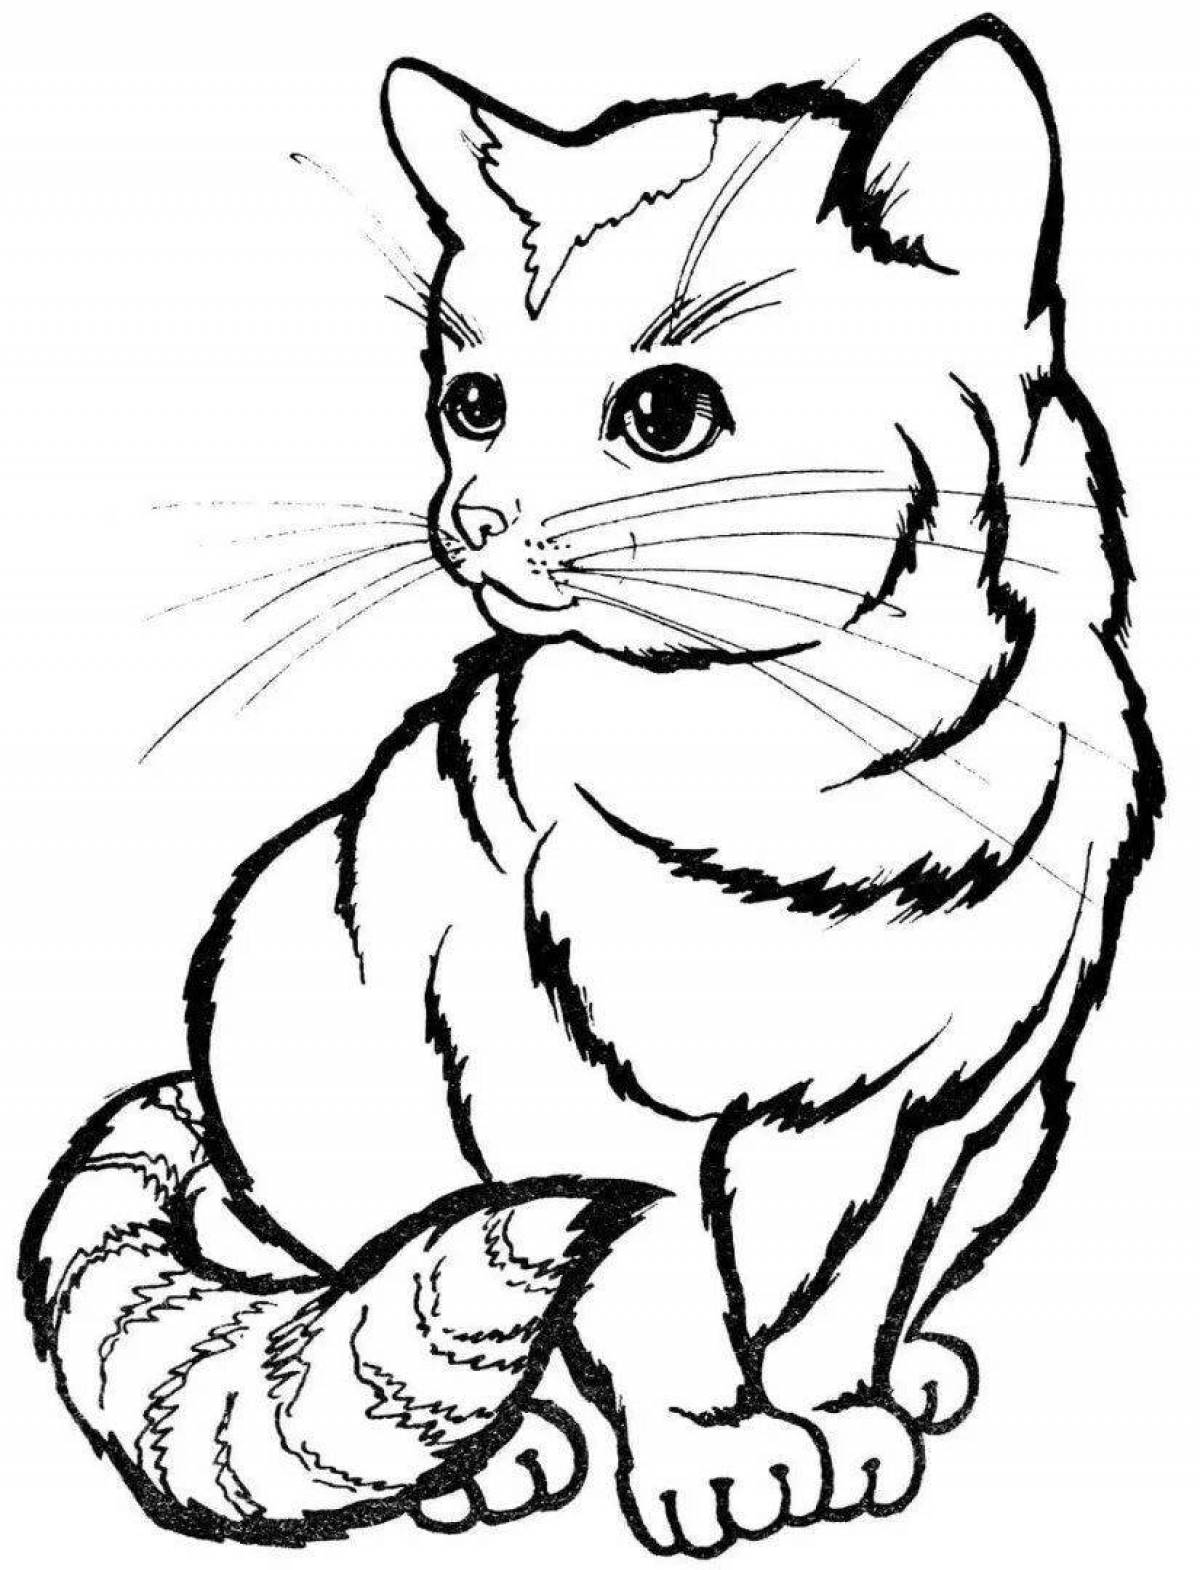 Fancy drawing of a cat